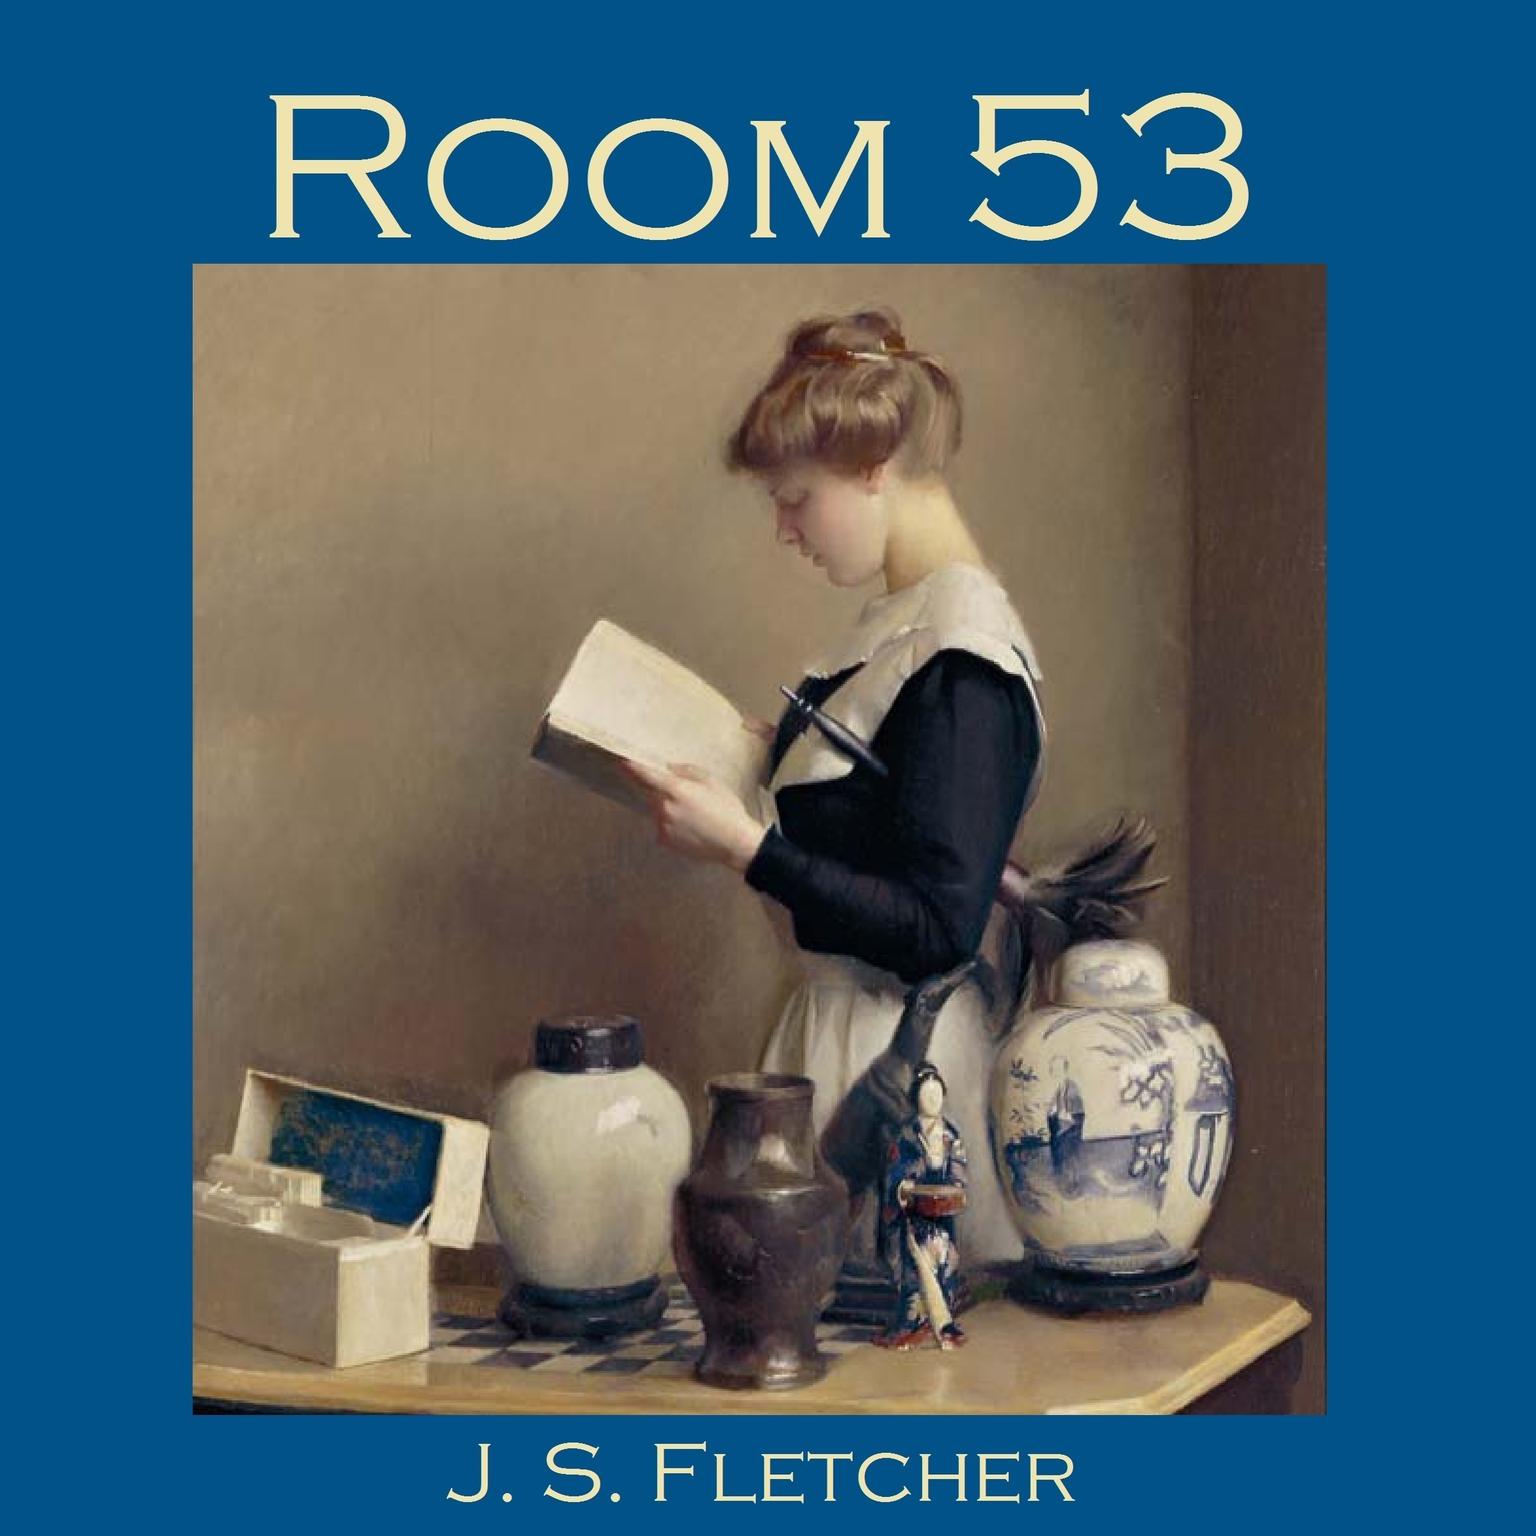 Room 53 Audiobook, by J. S. Fletcher